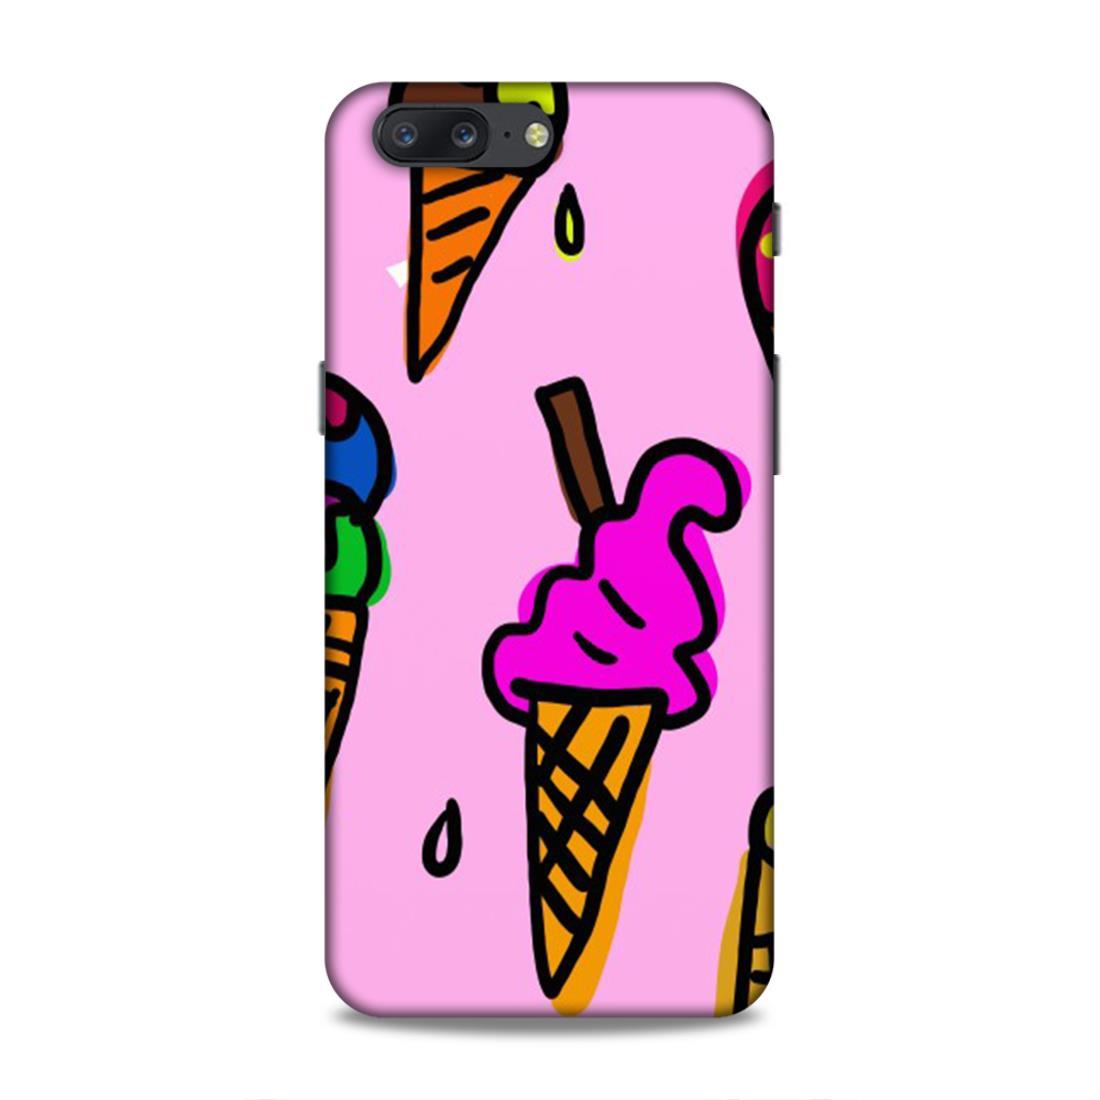 Icecream Pink OnePlus 5 Phone Cover